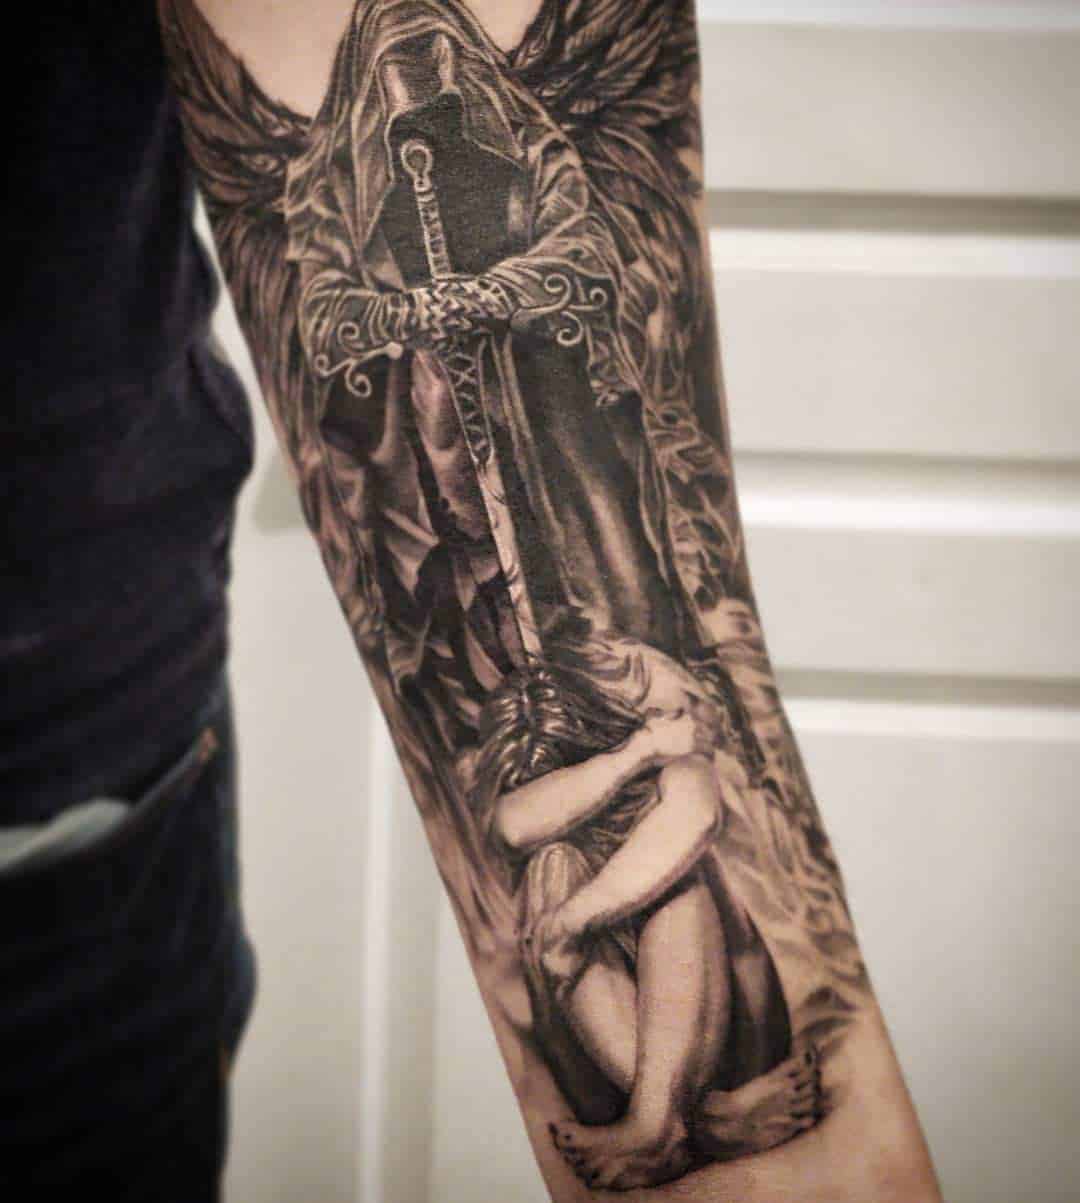 Angel Of Death Tattoo by Obliviondesign on DeviantArt